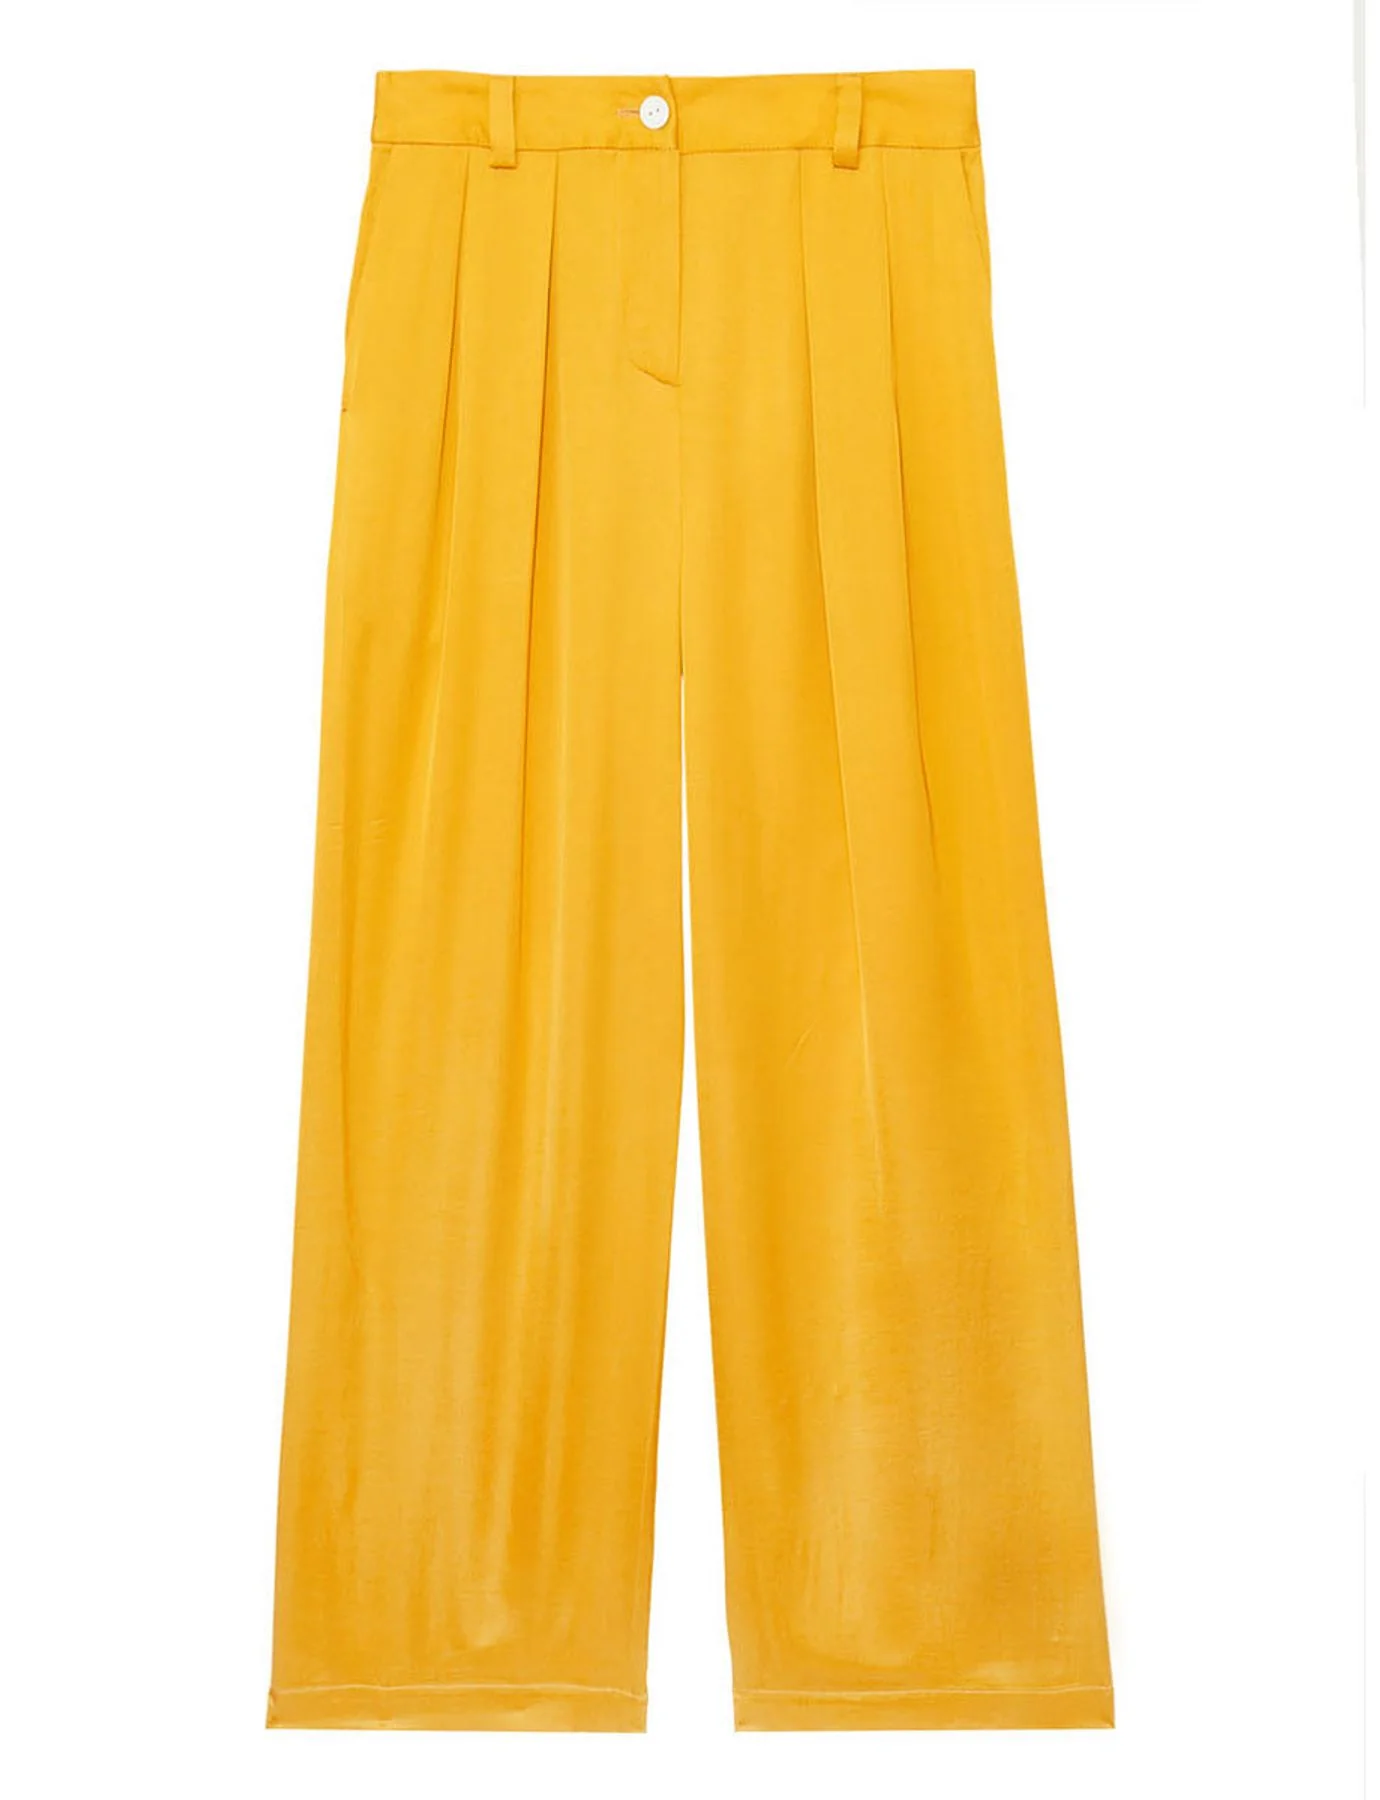 pantaloni-luciano-fluido-giallo-bottone-d-39-oro